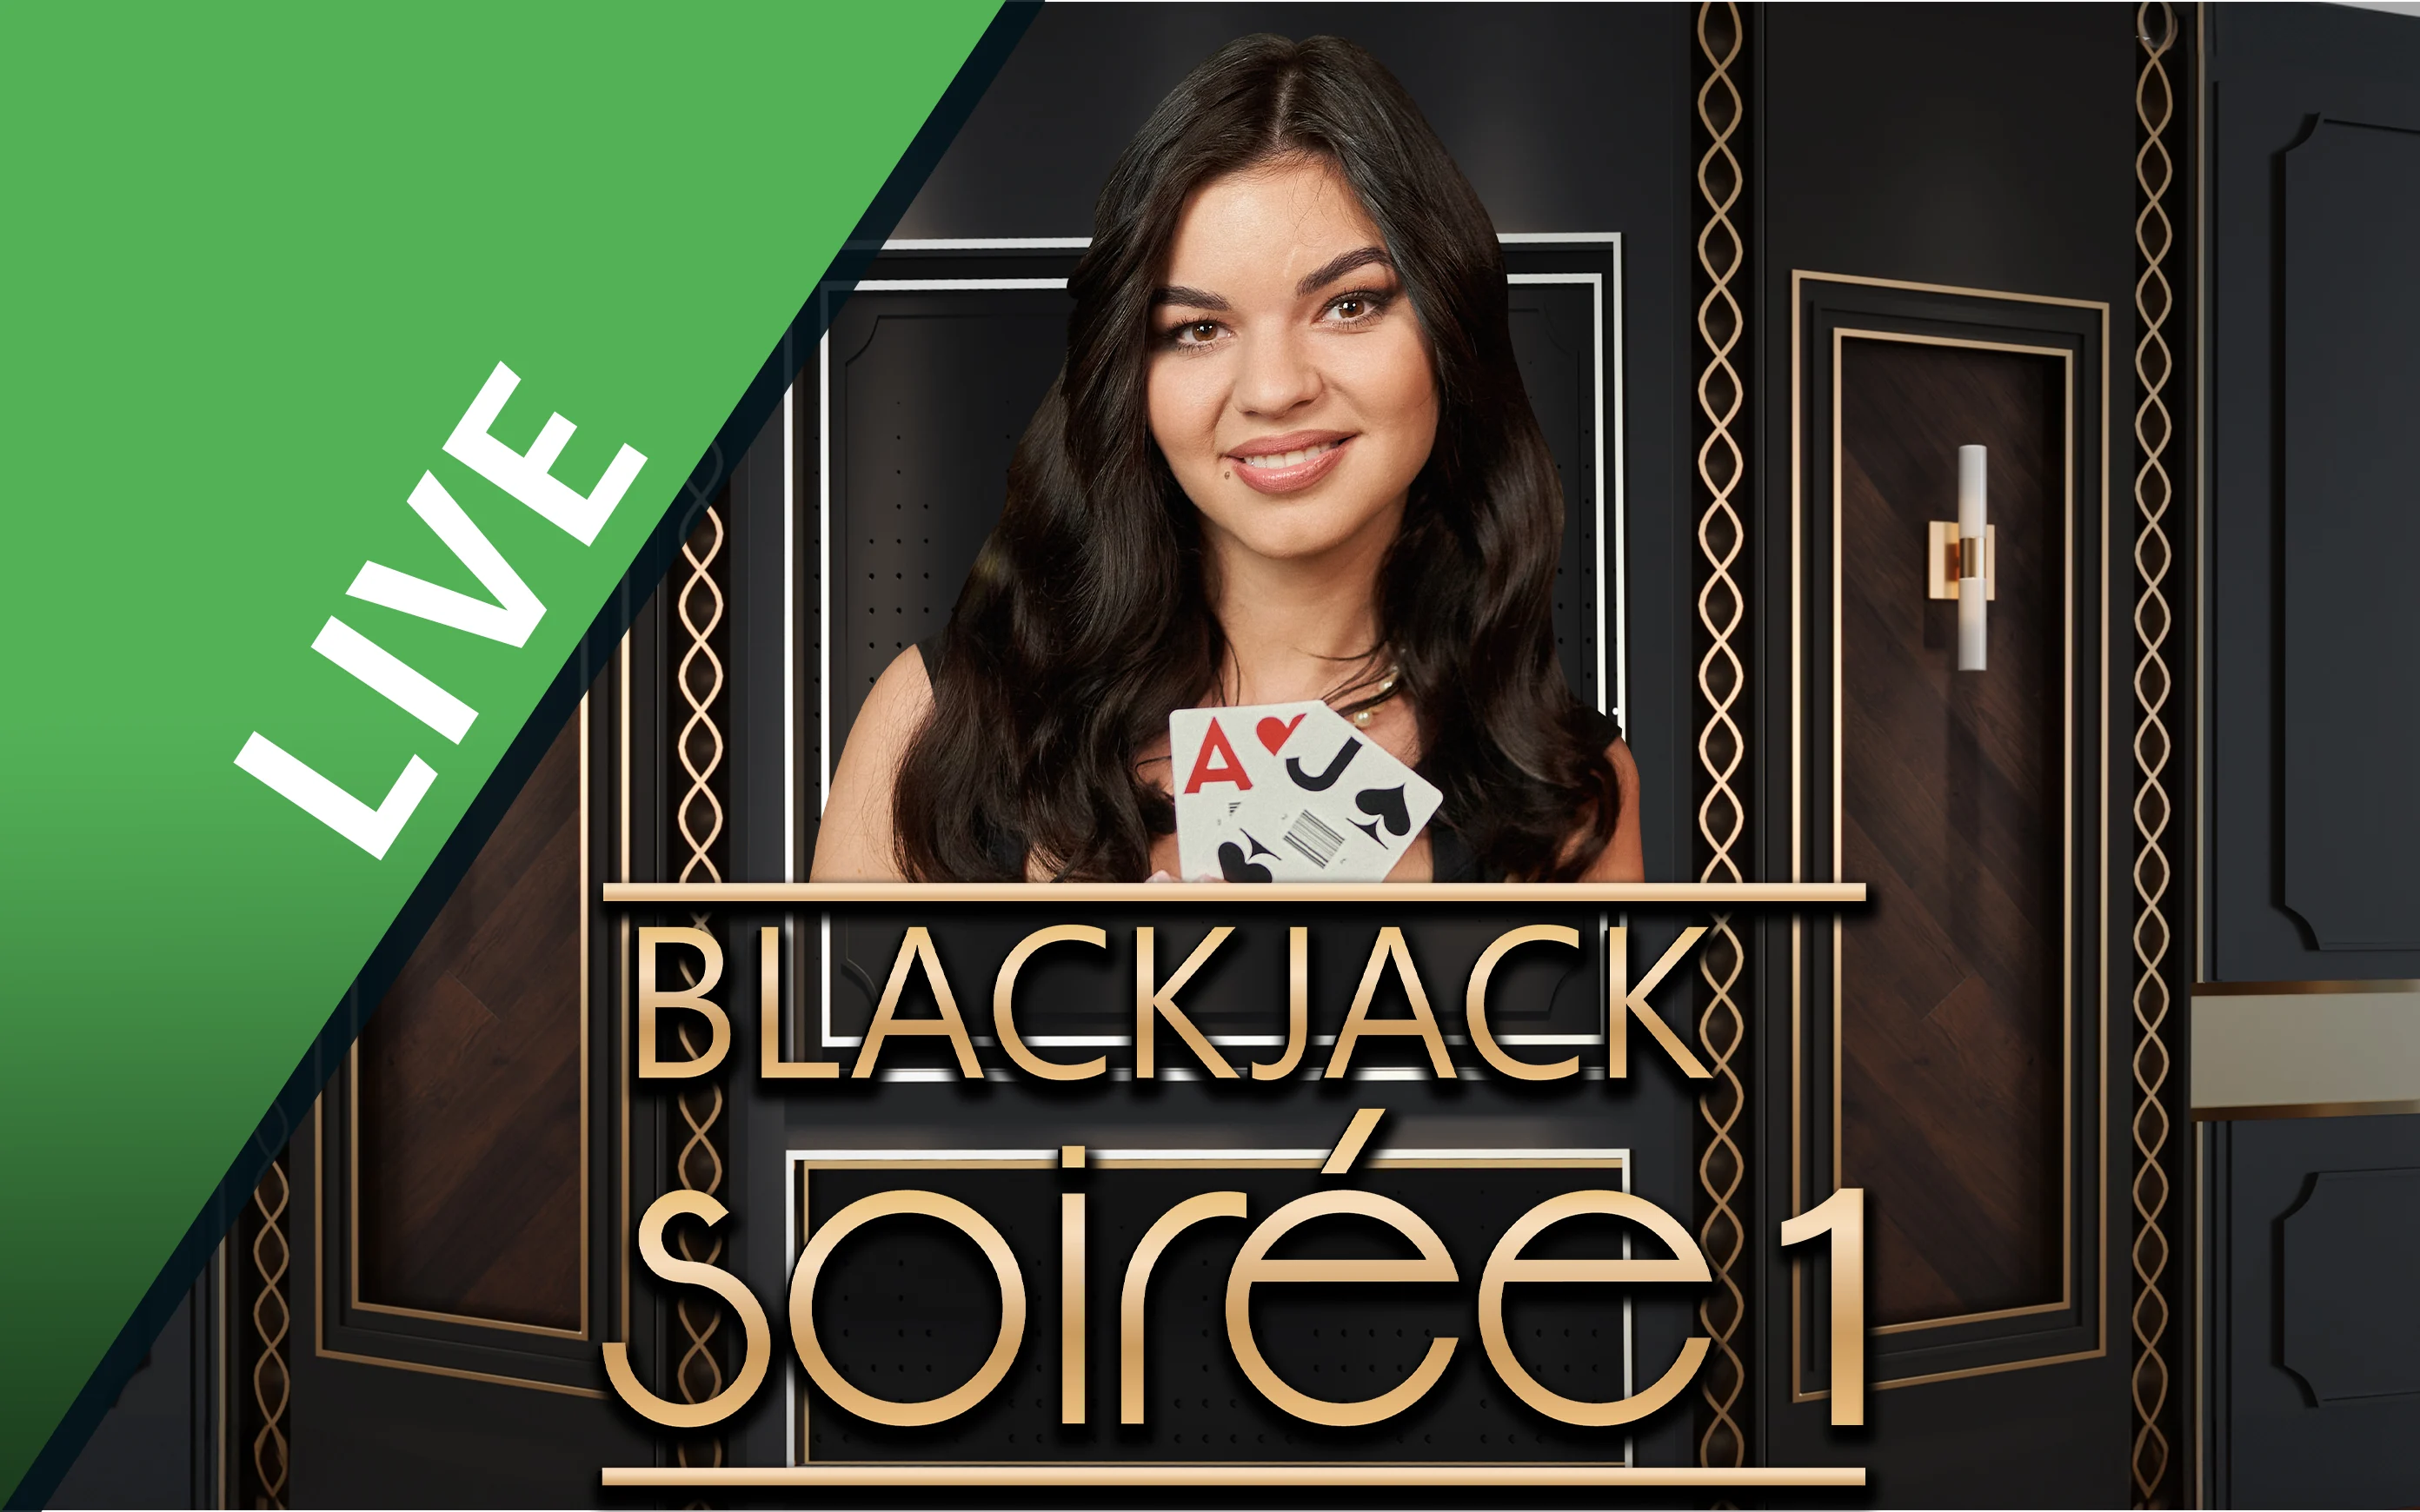 Gioca a Blackjack Soirée 1 sul casino online Starcasino.be